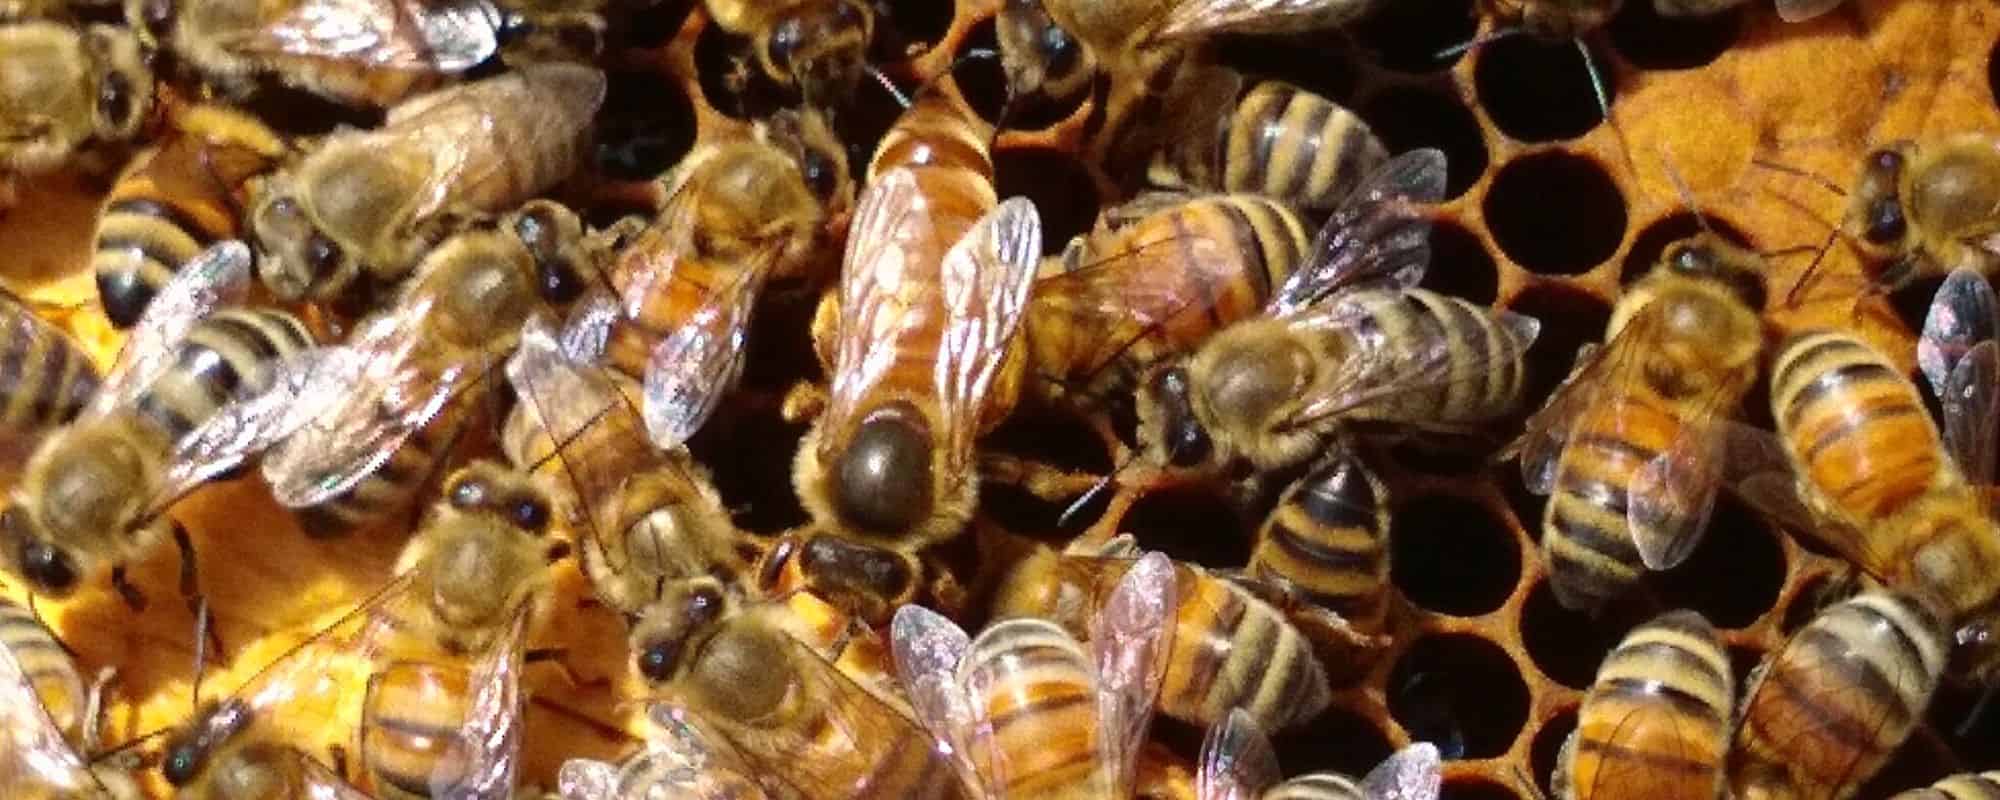 Queen and worker bees